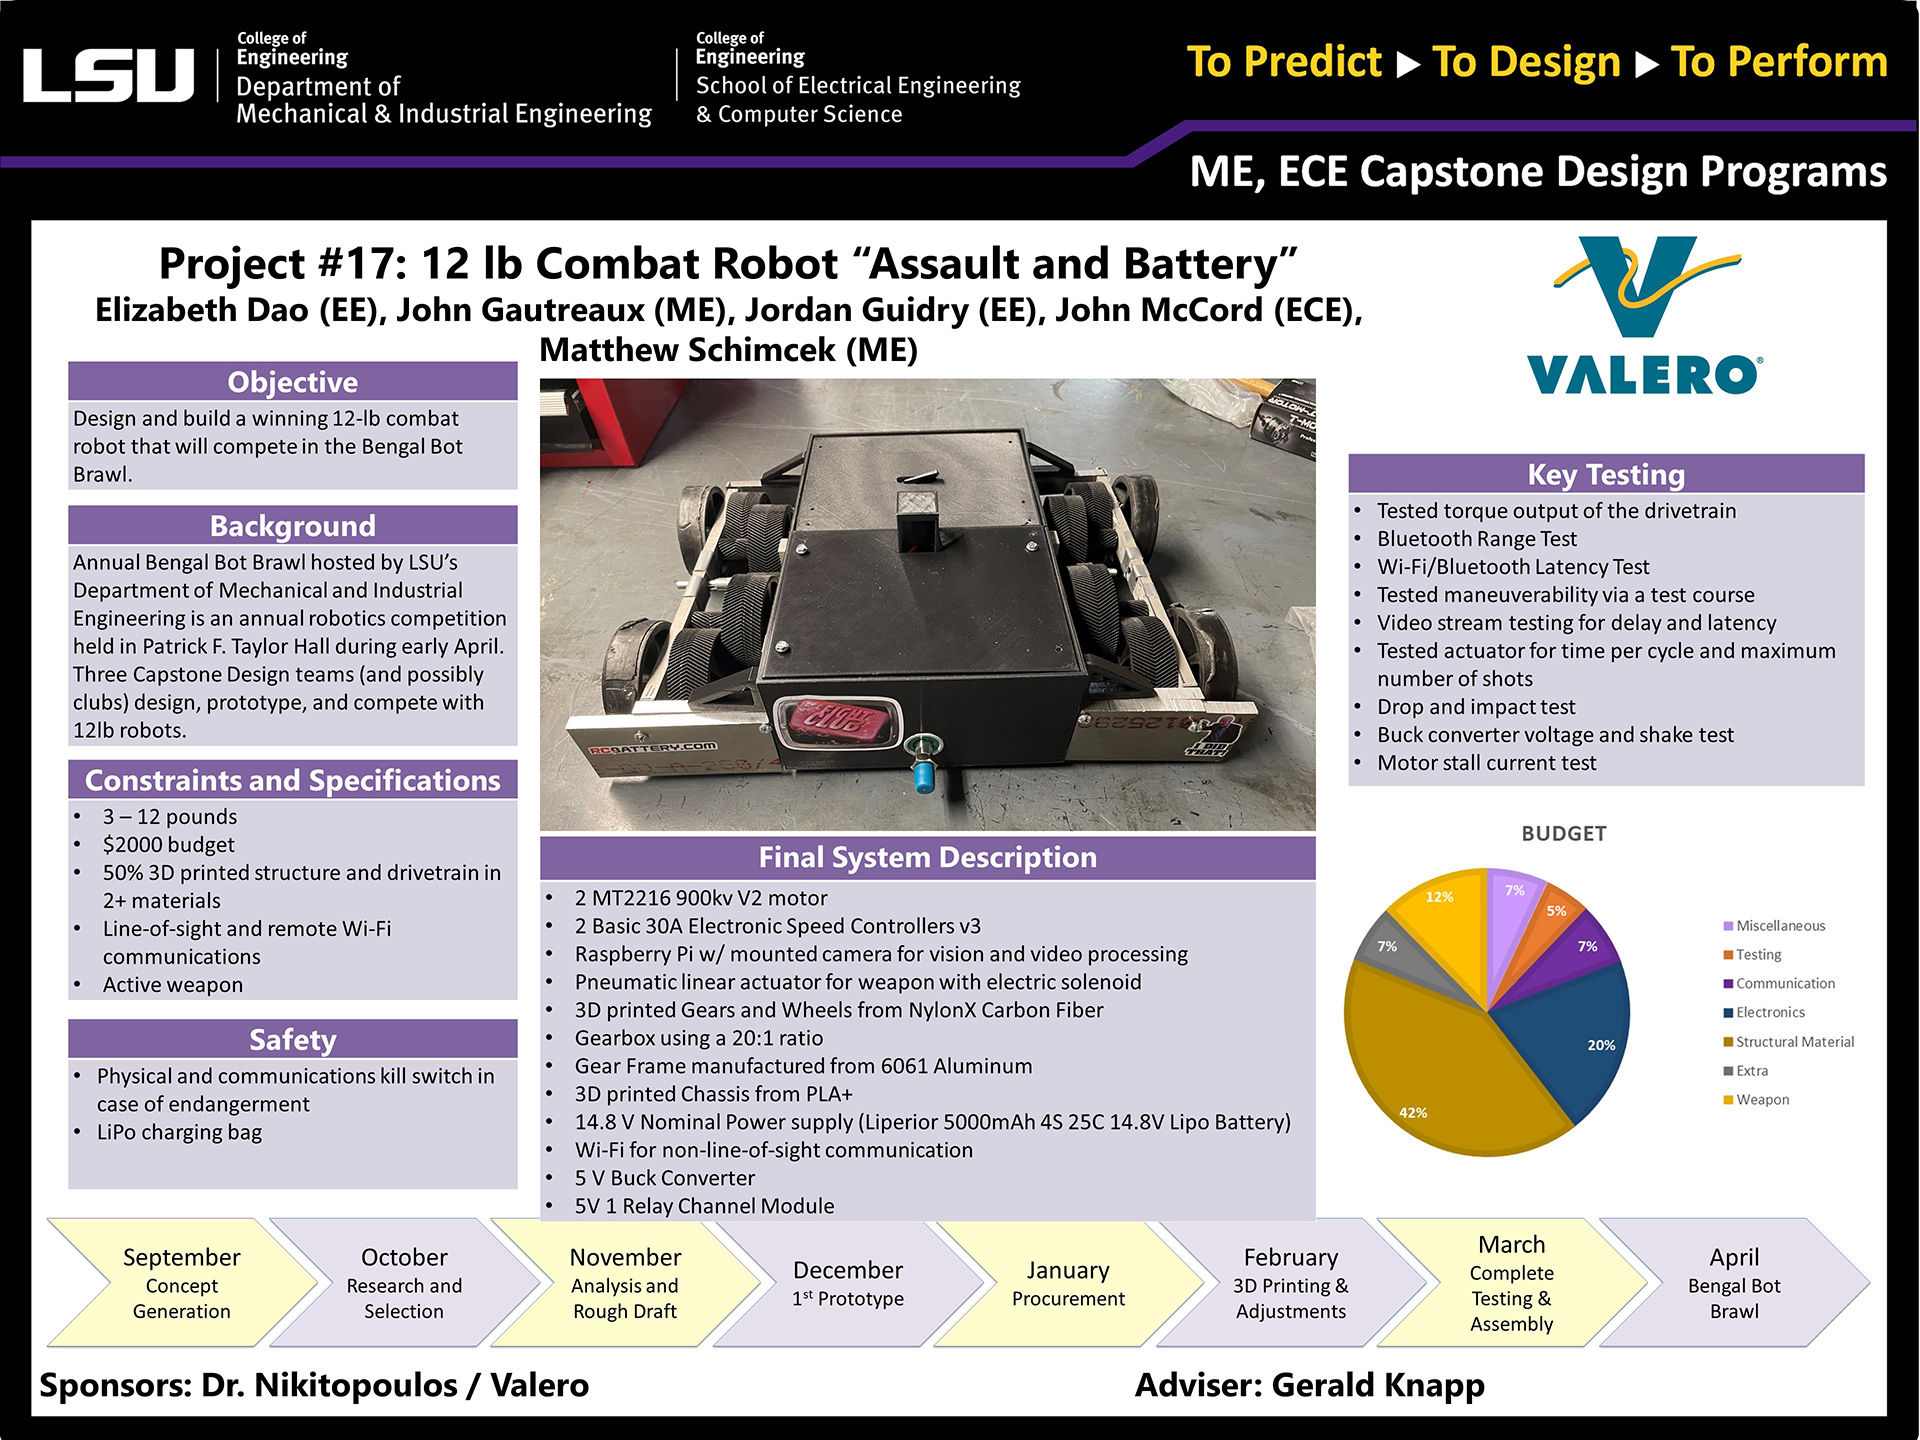 Project 17: 12lb Combat Robot “Assault and Battery” (2022)